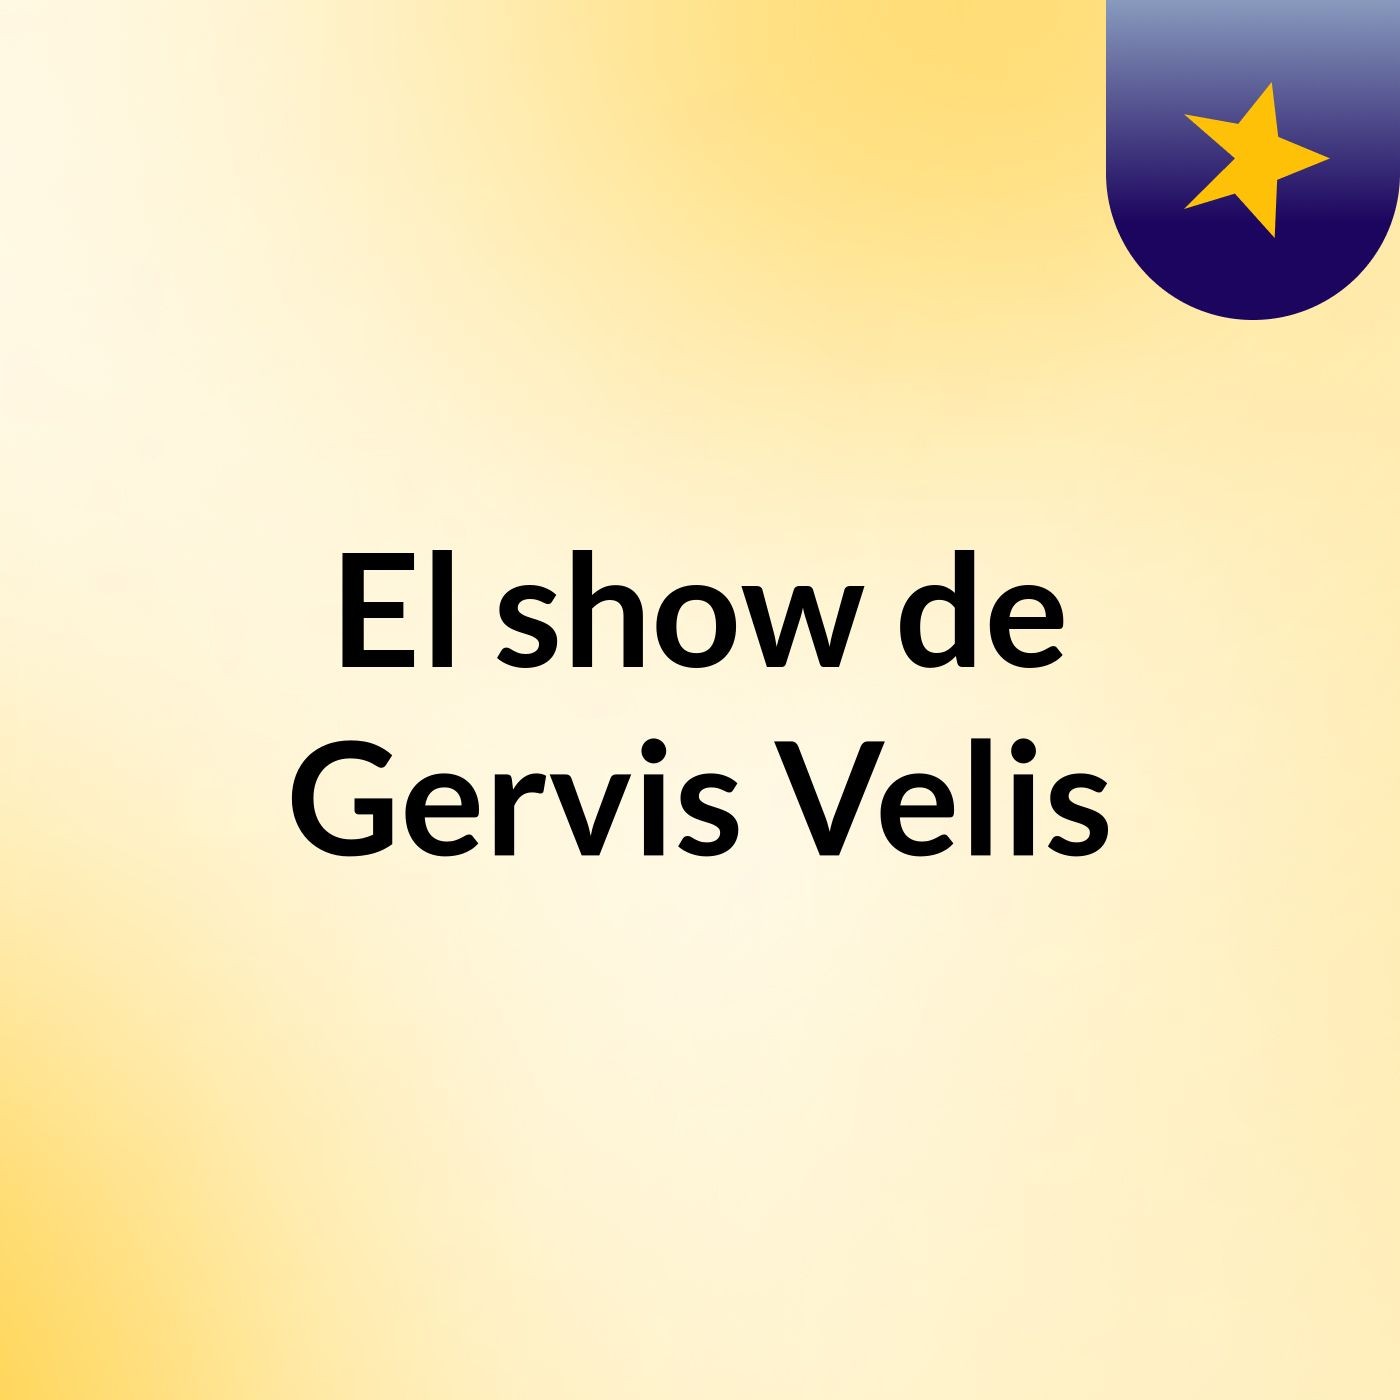 El show de Gervis Velis